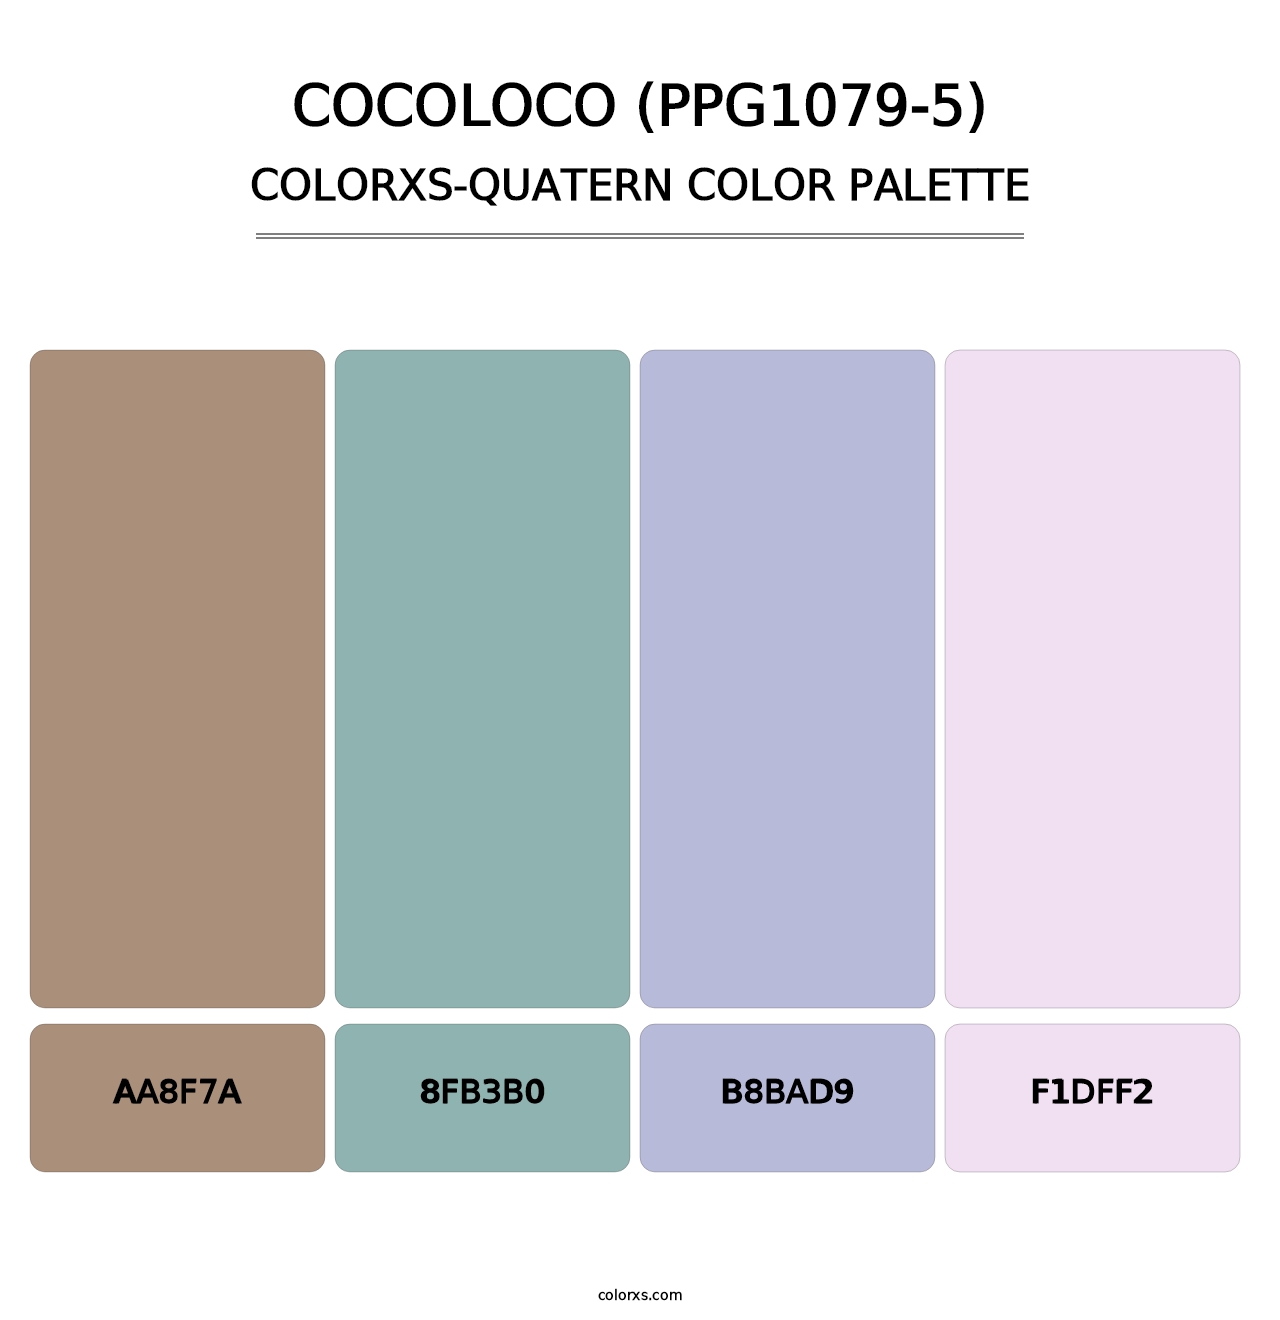 Cocoloco (PPG1079-5) - Colorxs Quatern Palette